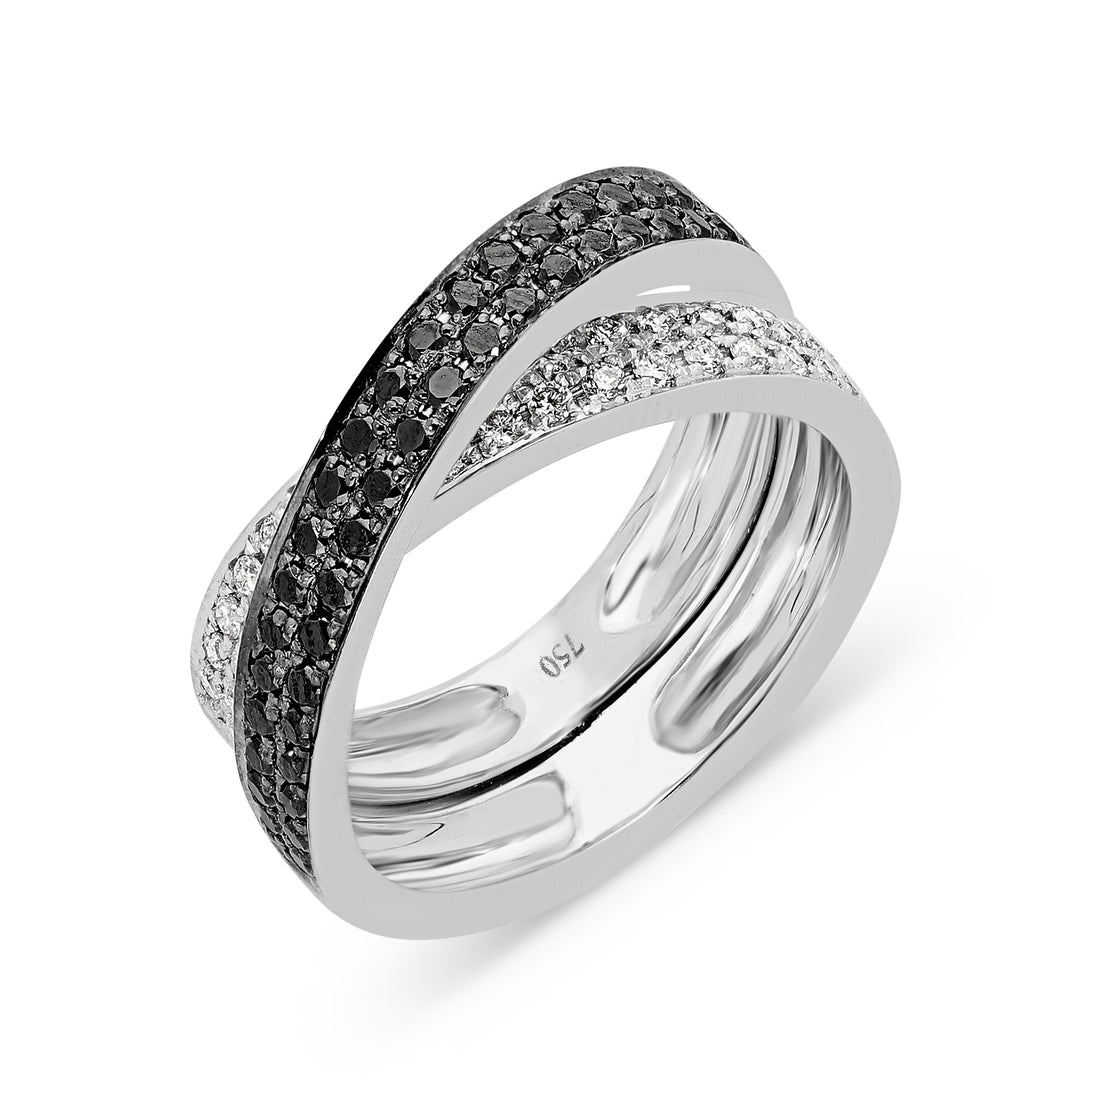 Interlocking diamond wedding band 18-karat white gold bands illuminated by 0.83-carats of black and white diamonds. 